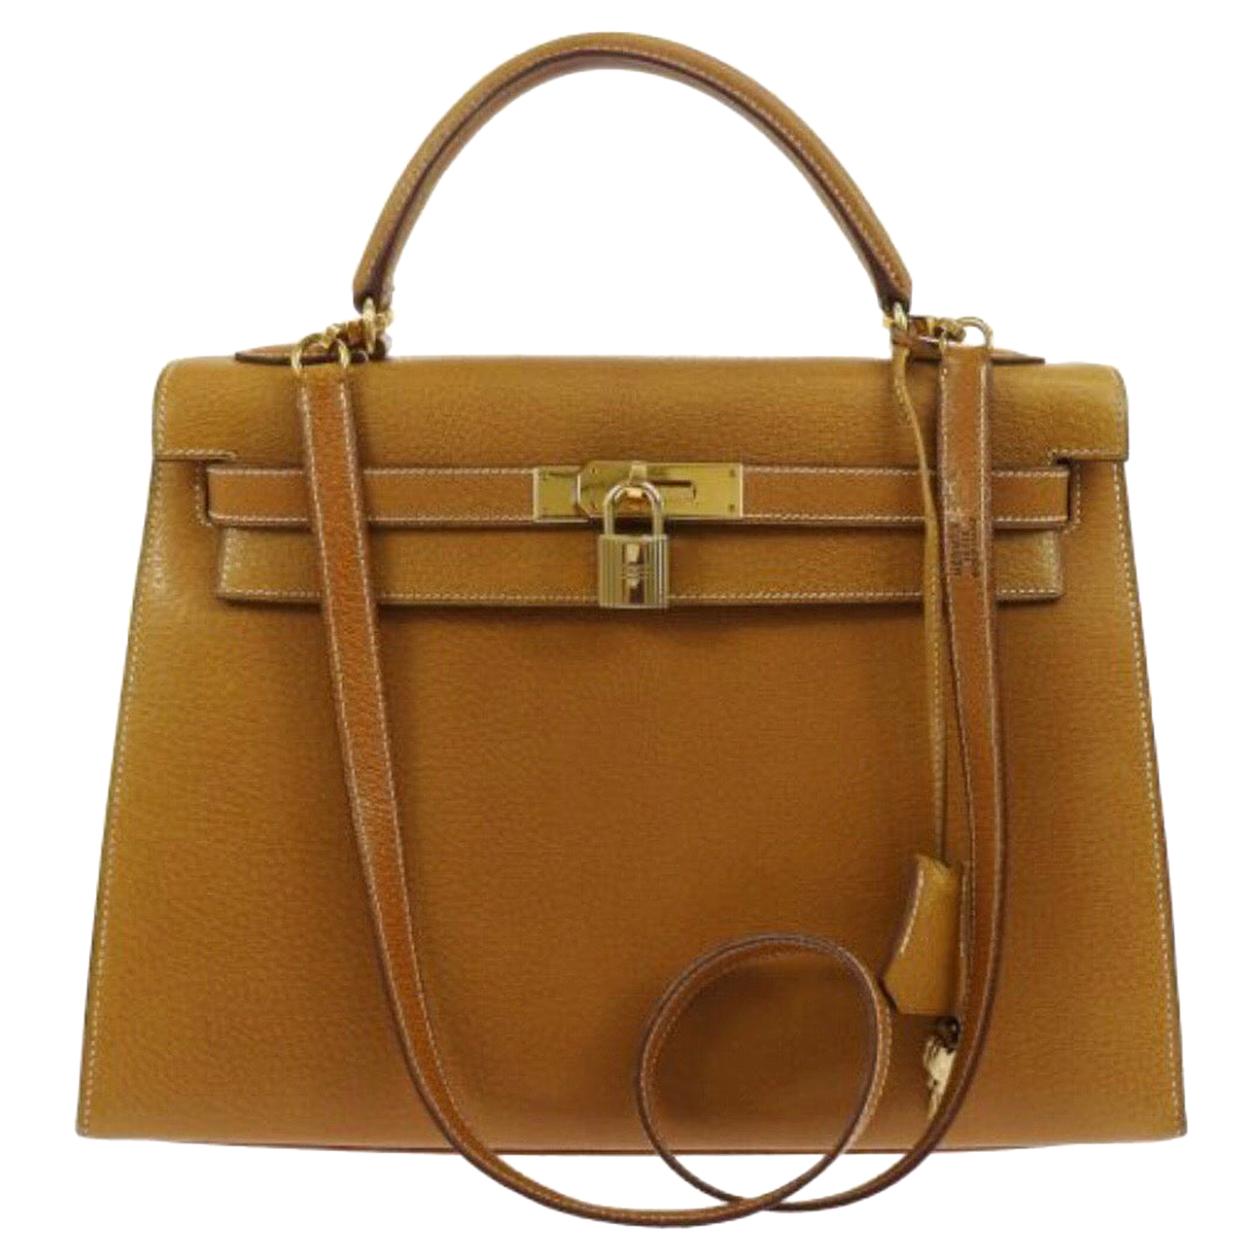 Hermes Kelly 32 Cognac Tan Leather Gold Top Handle Satchel Shoulder Bag